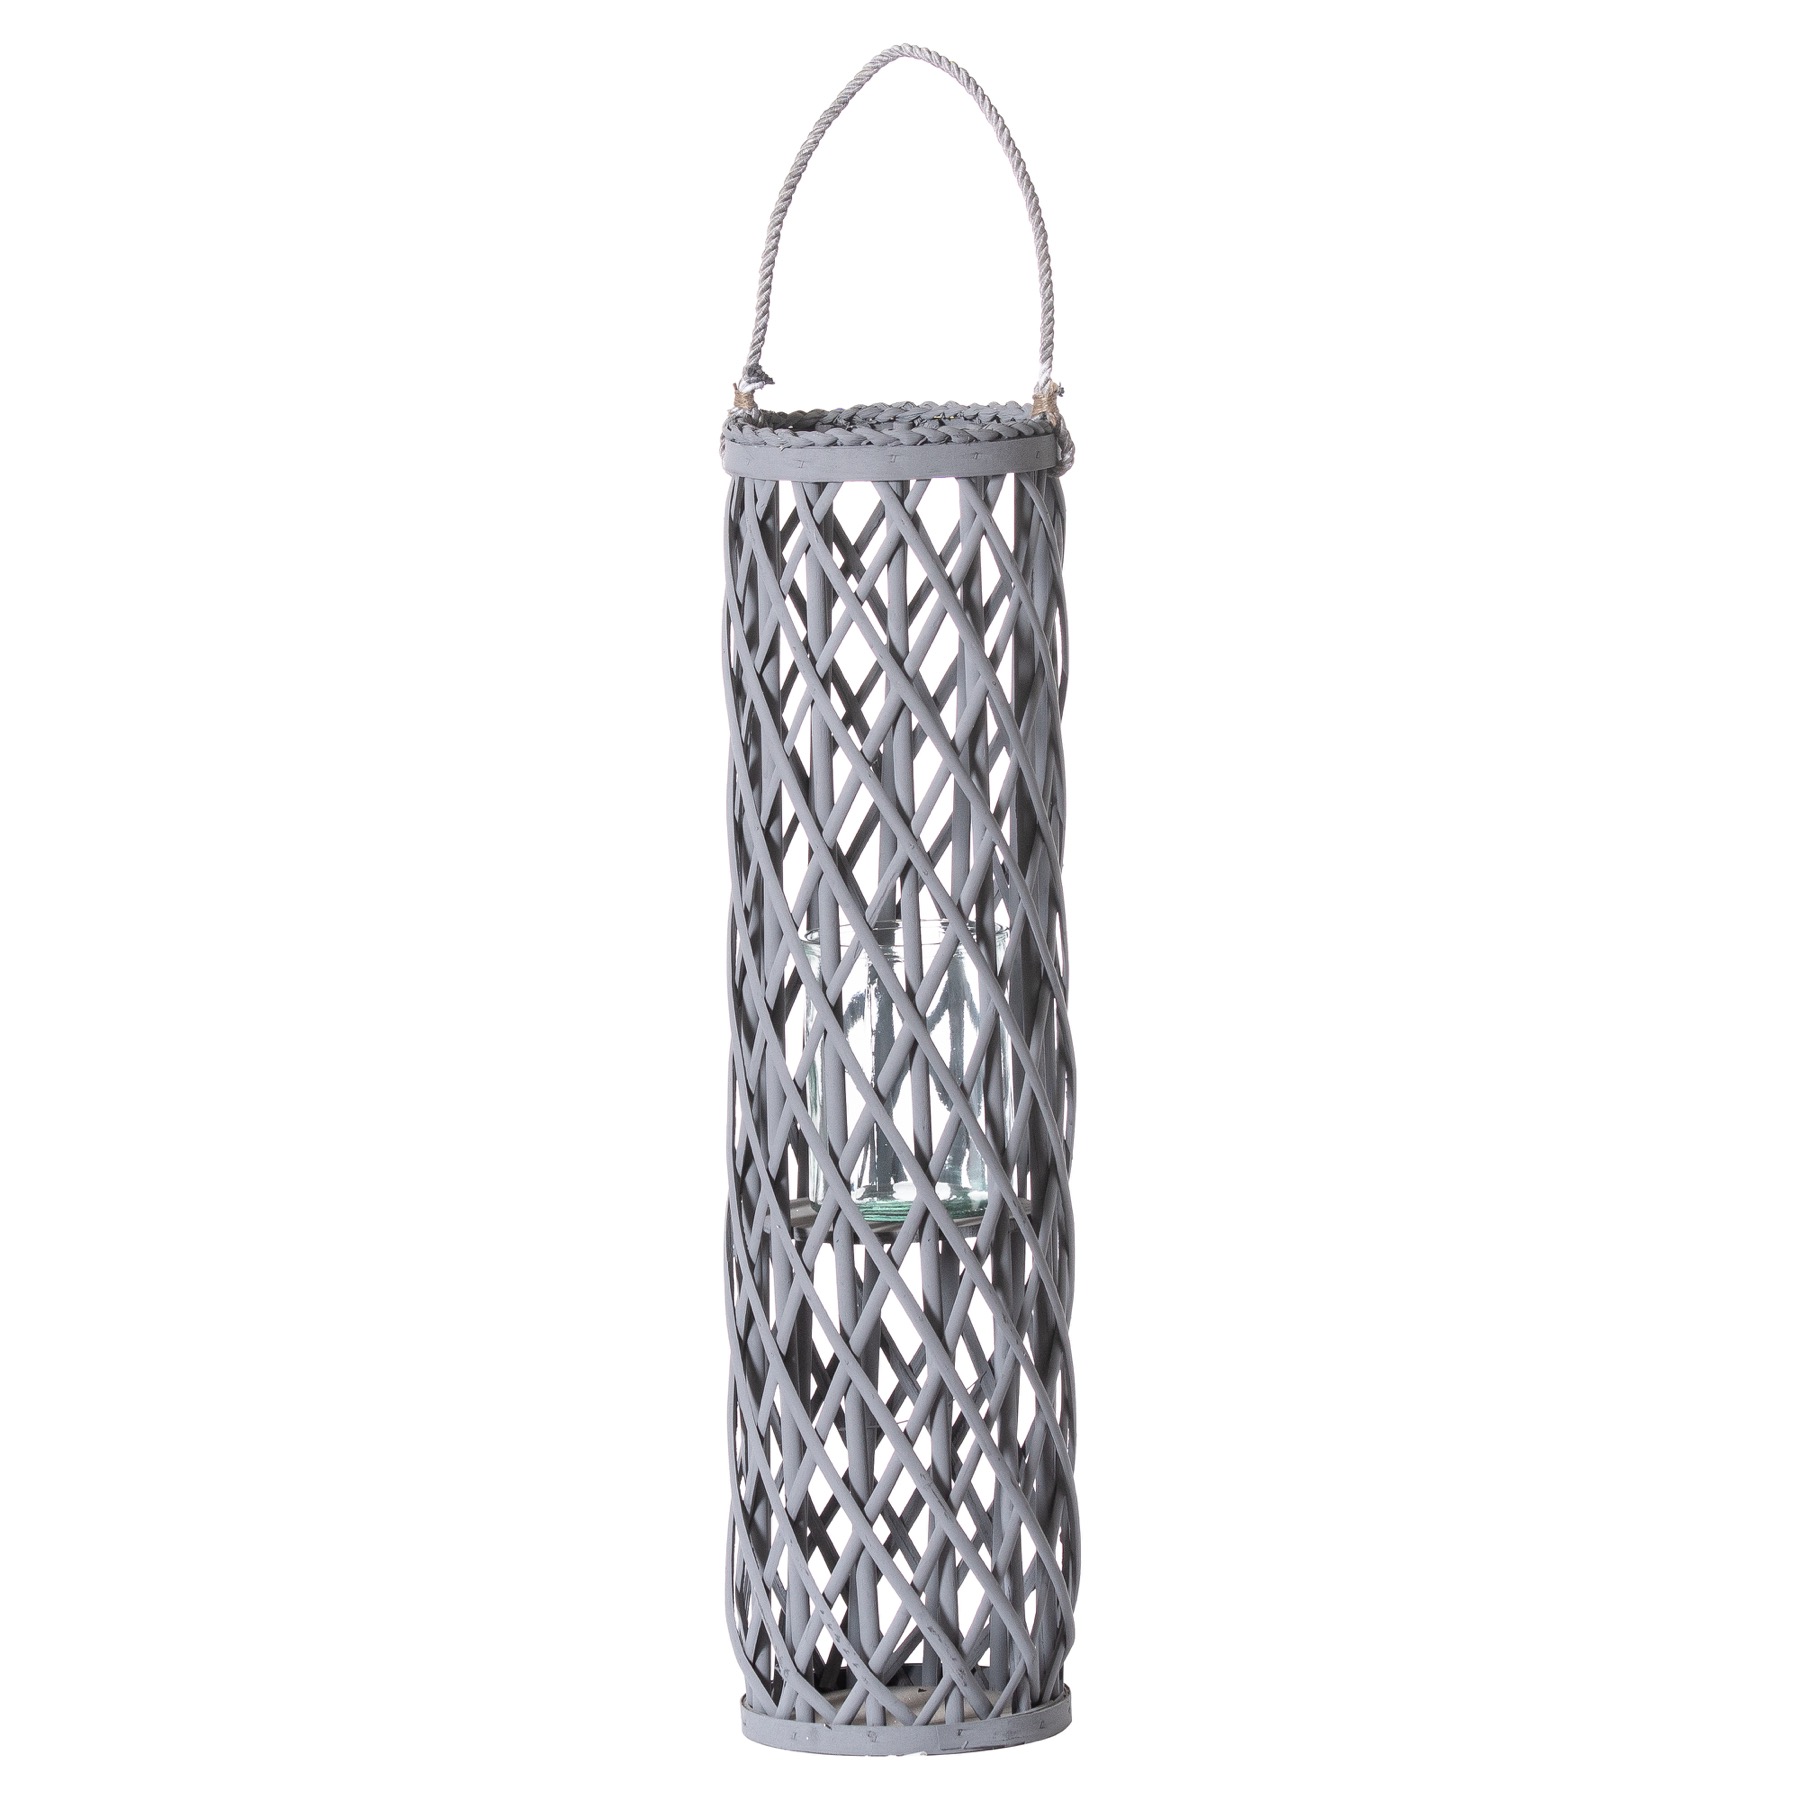 Large Grey Wicker Lantern With Glass Hurricane - Image 1